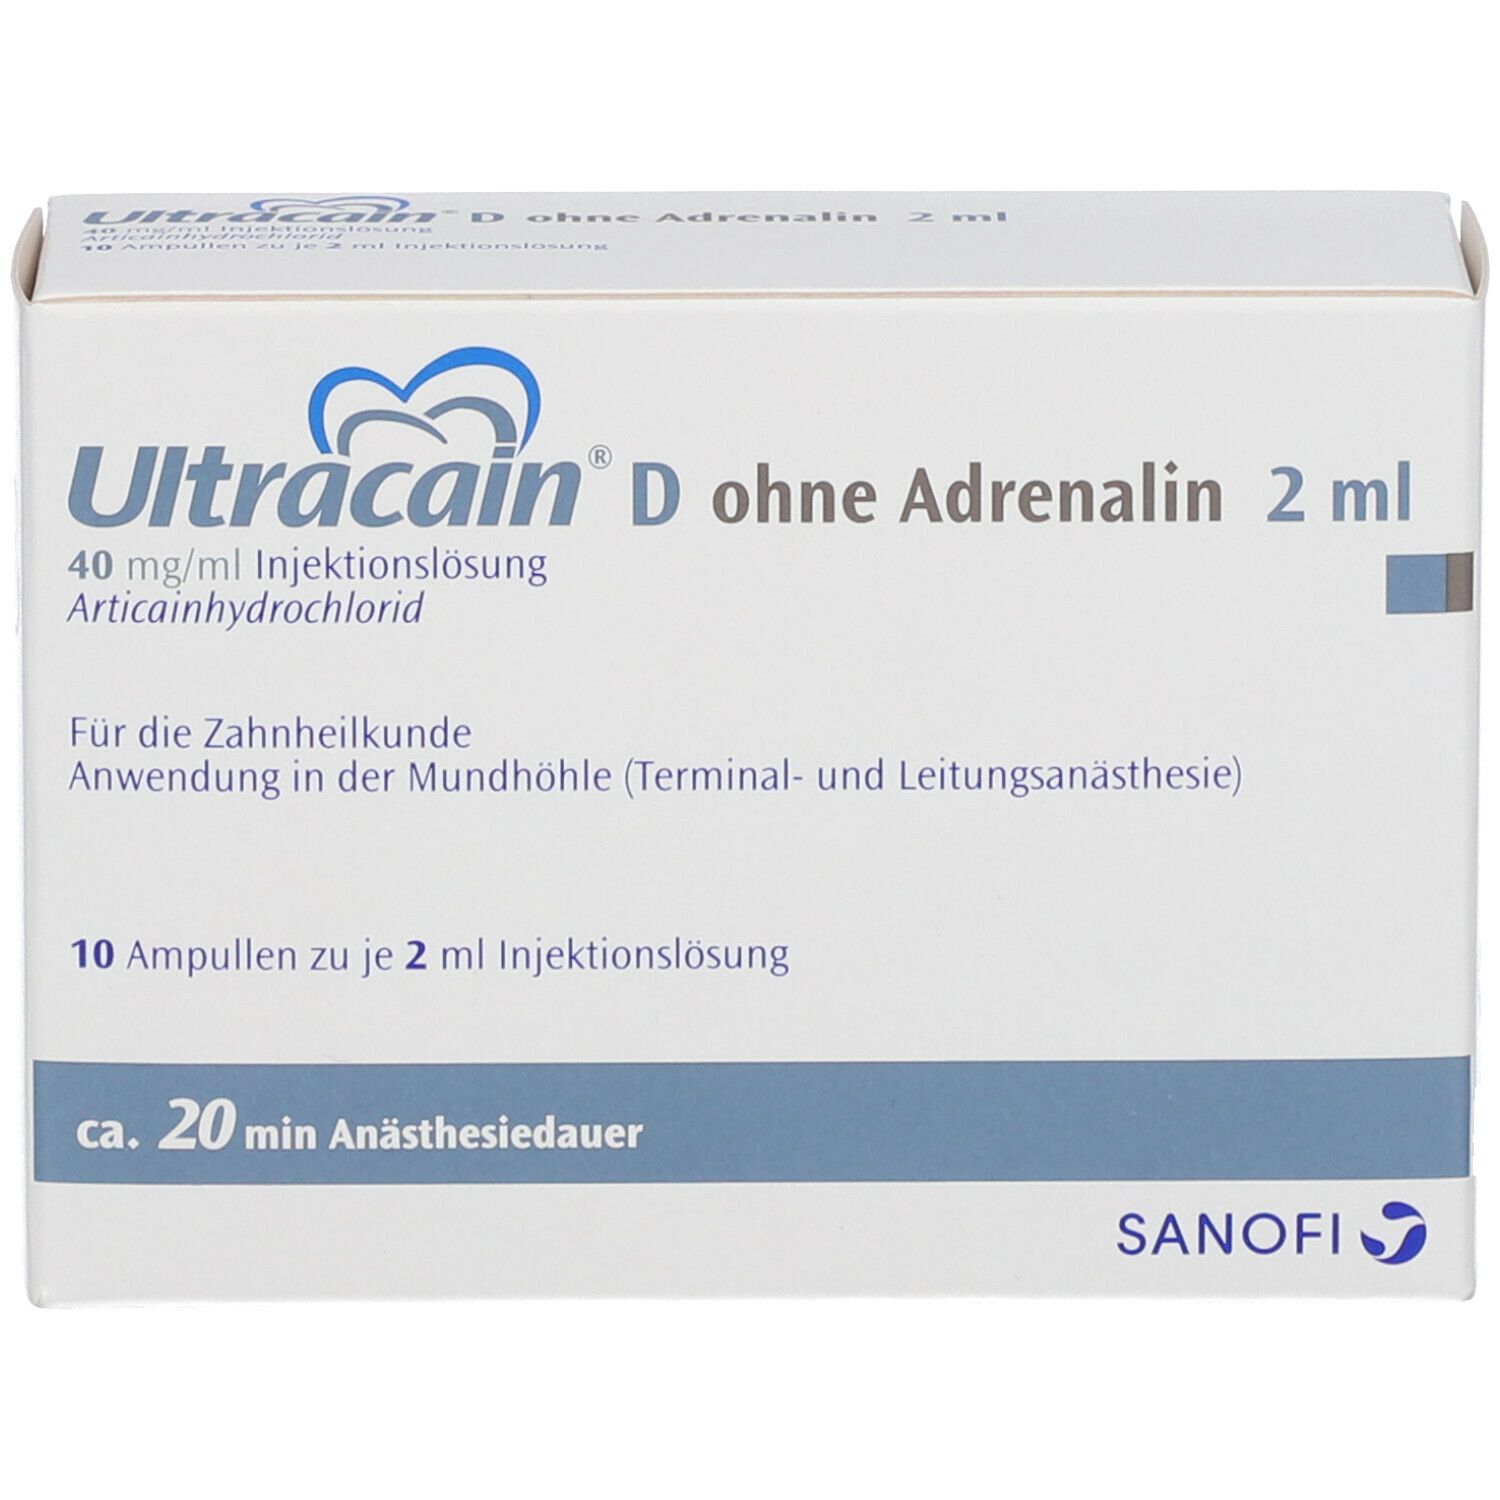 Ultracain® D ohne Adrenalin 2 ml